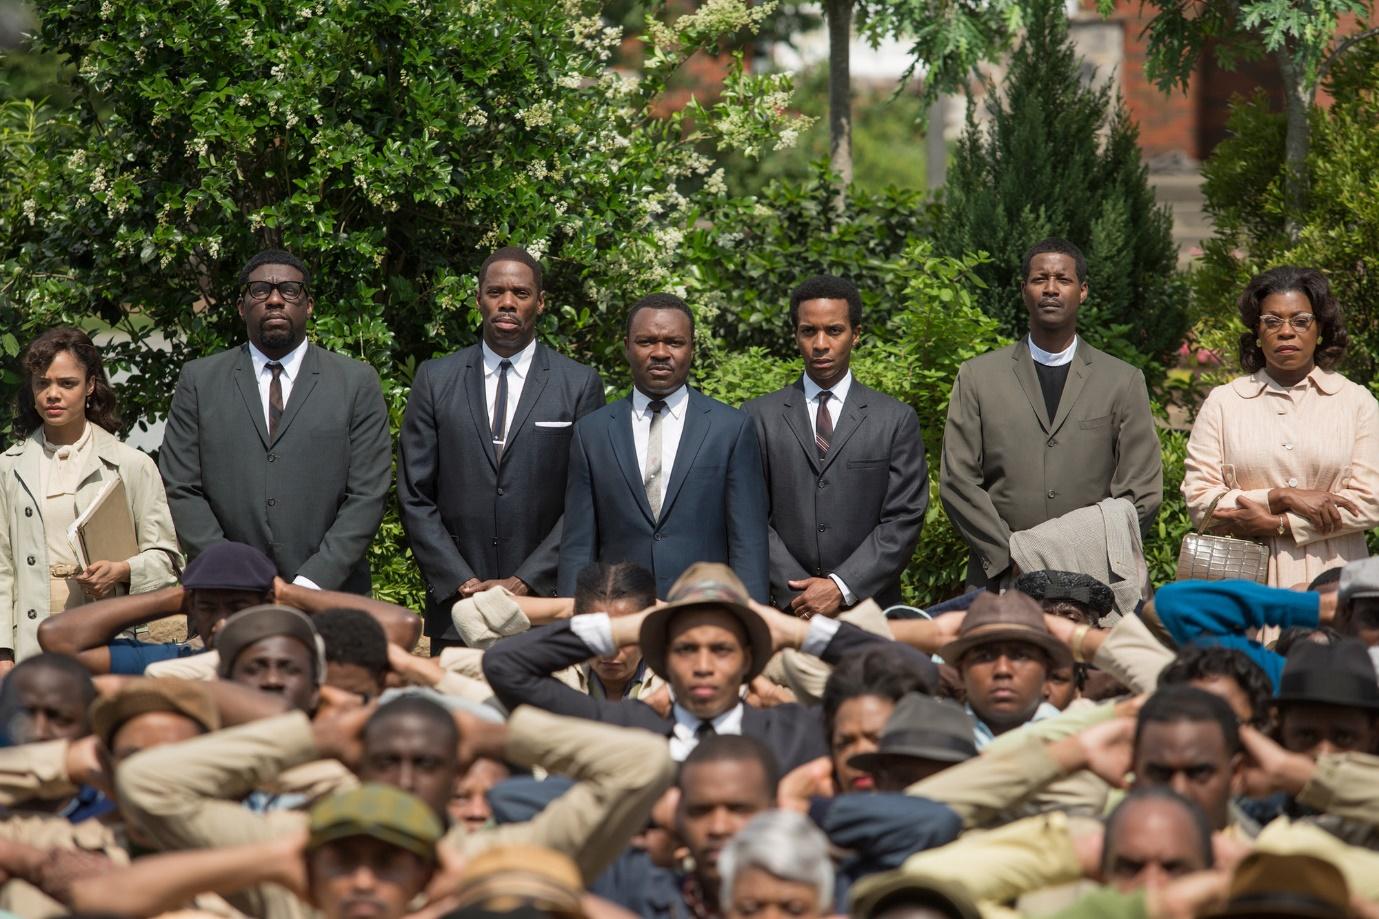 Selma. 2014. Directed by Ava DuVernay | MoMA